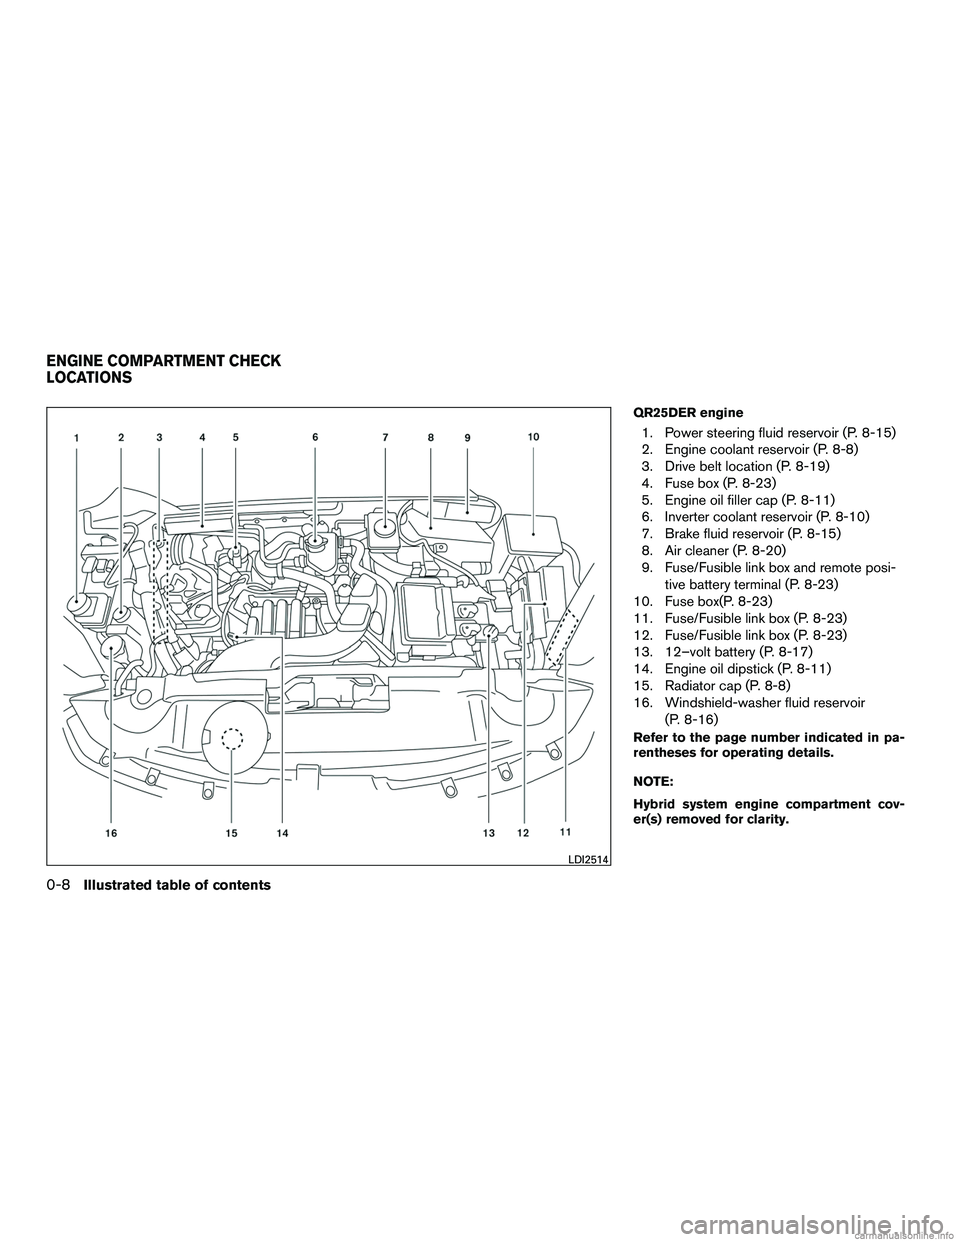 INFINITI QX60 HYBRID 2016  Owners Manual QR25DER engine
1. Power steering fluid reservoir (P. 8-15)
2. Engine coolant reservoir (P. 8-8)
3. Drive belt location (P. 8-19)
4. Fuse box (P. 8-23)
5. Engine oil filler cap (P. 8-11)
6. Inverter co